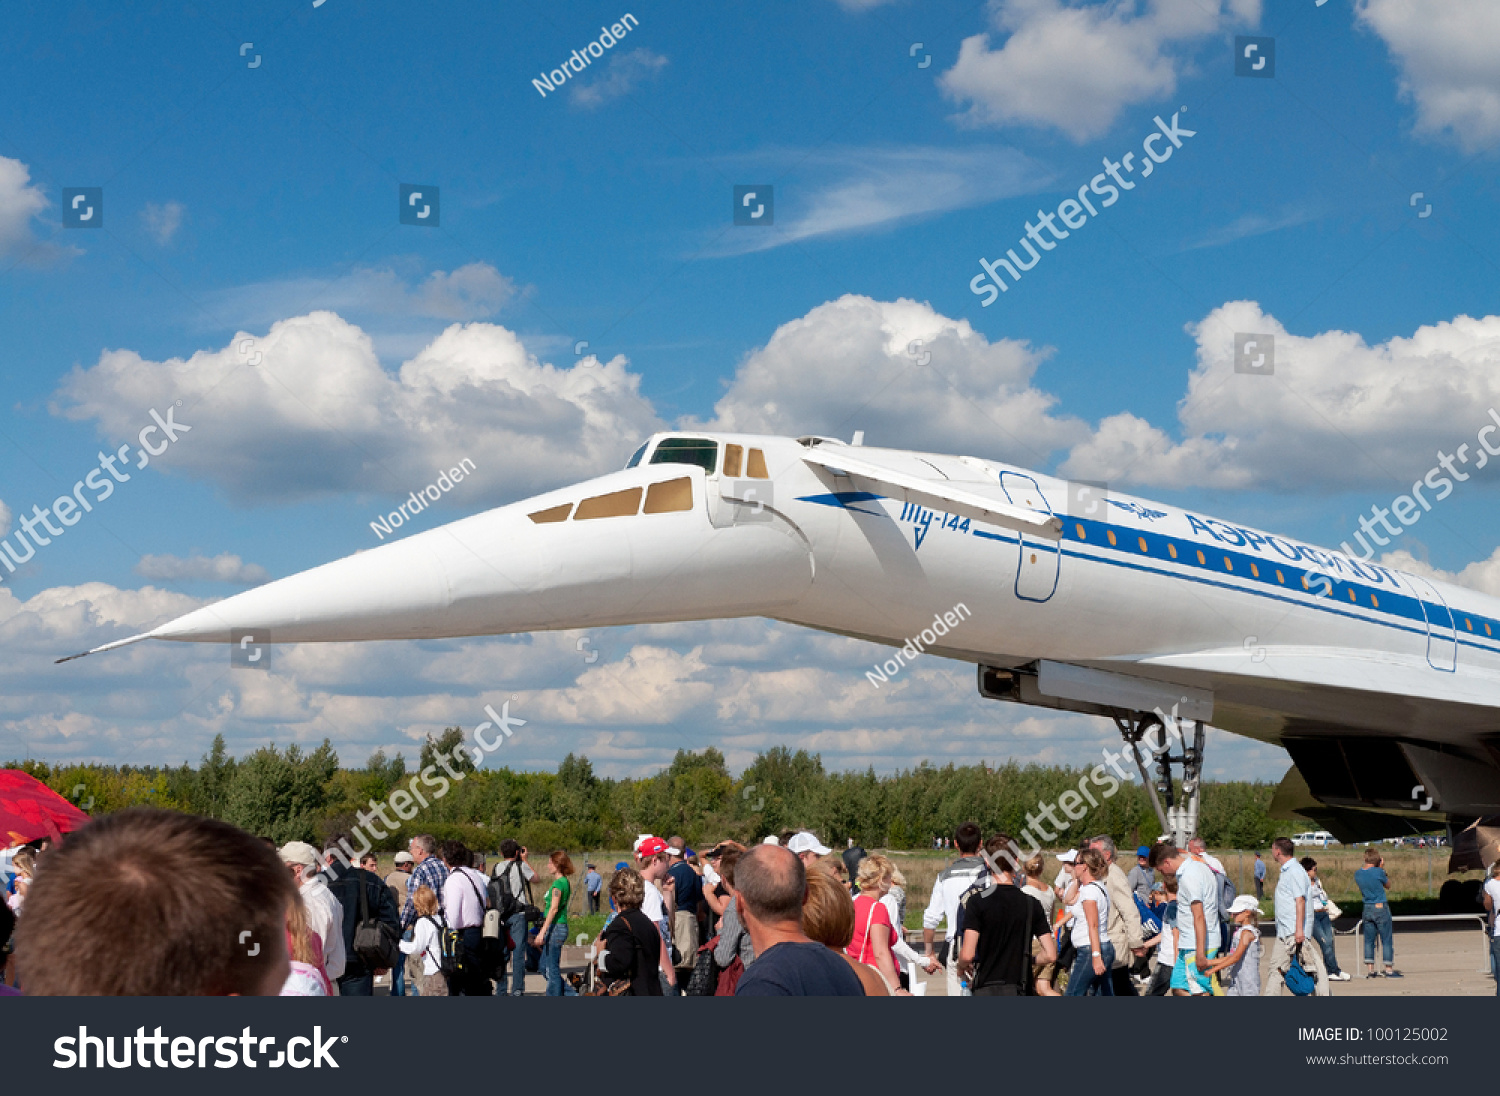 Amazoncom: Tupolev Tu144: The Soviet Supersonic Airliner